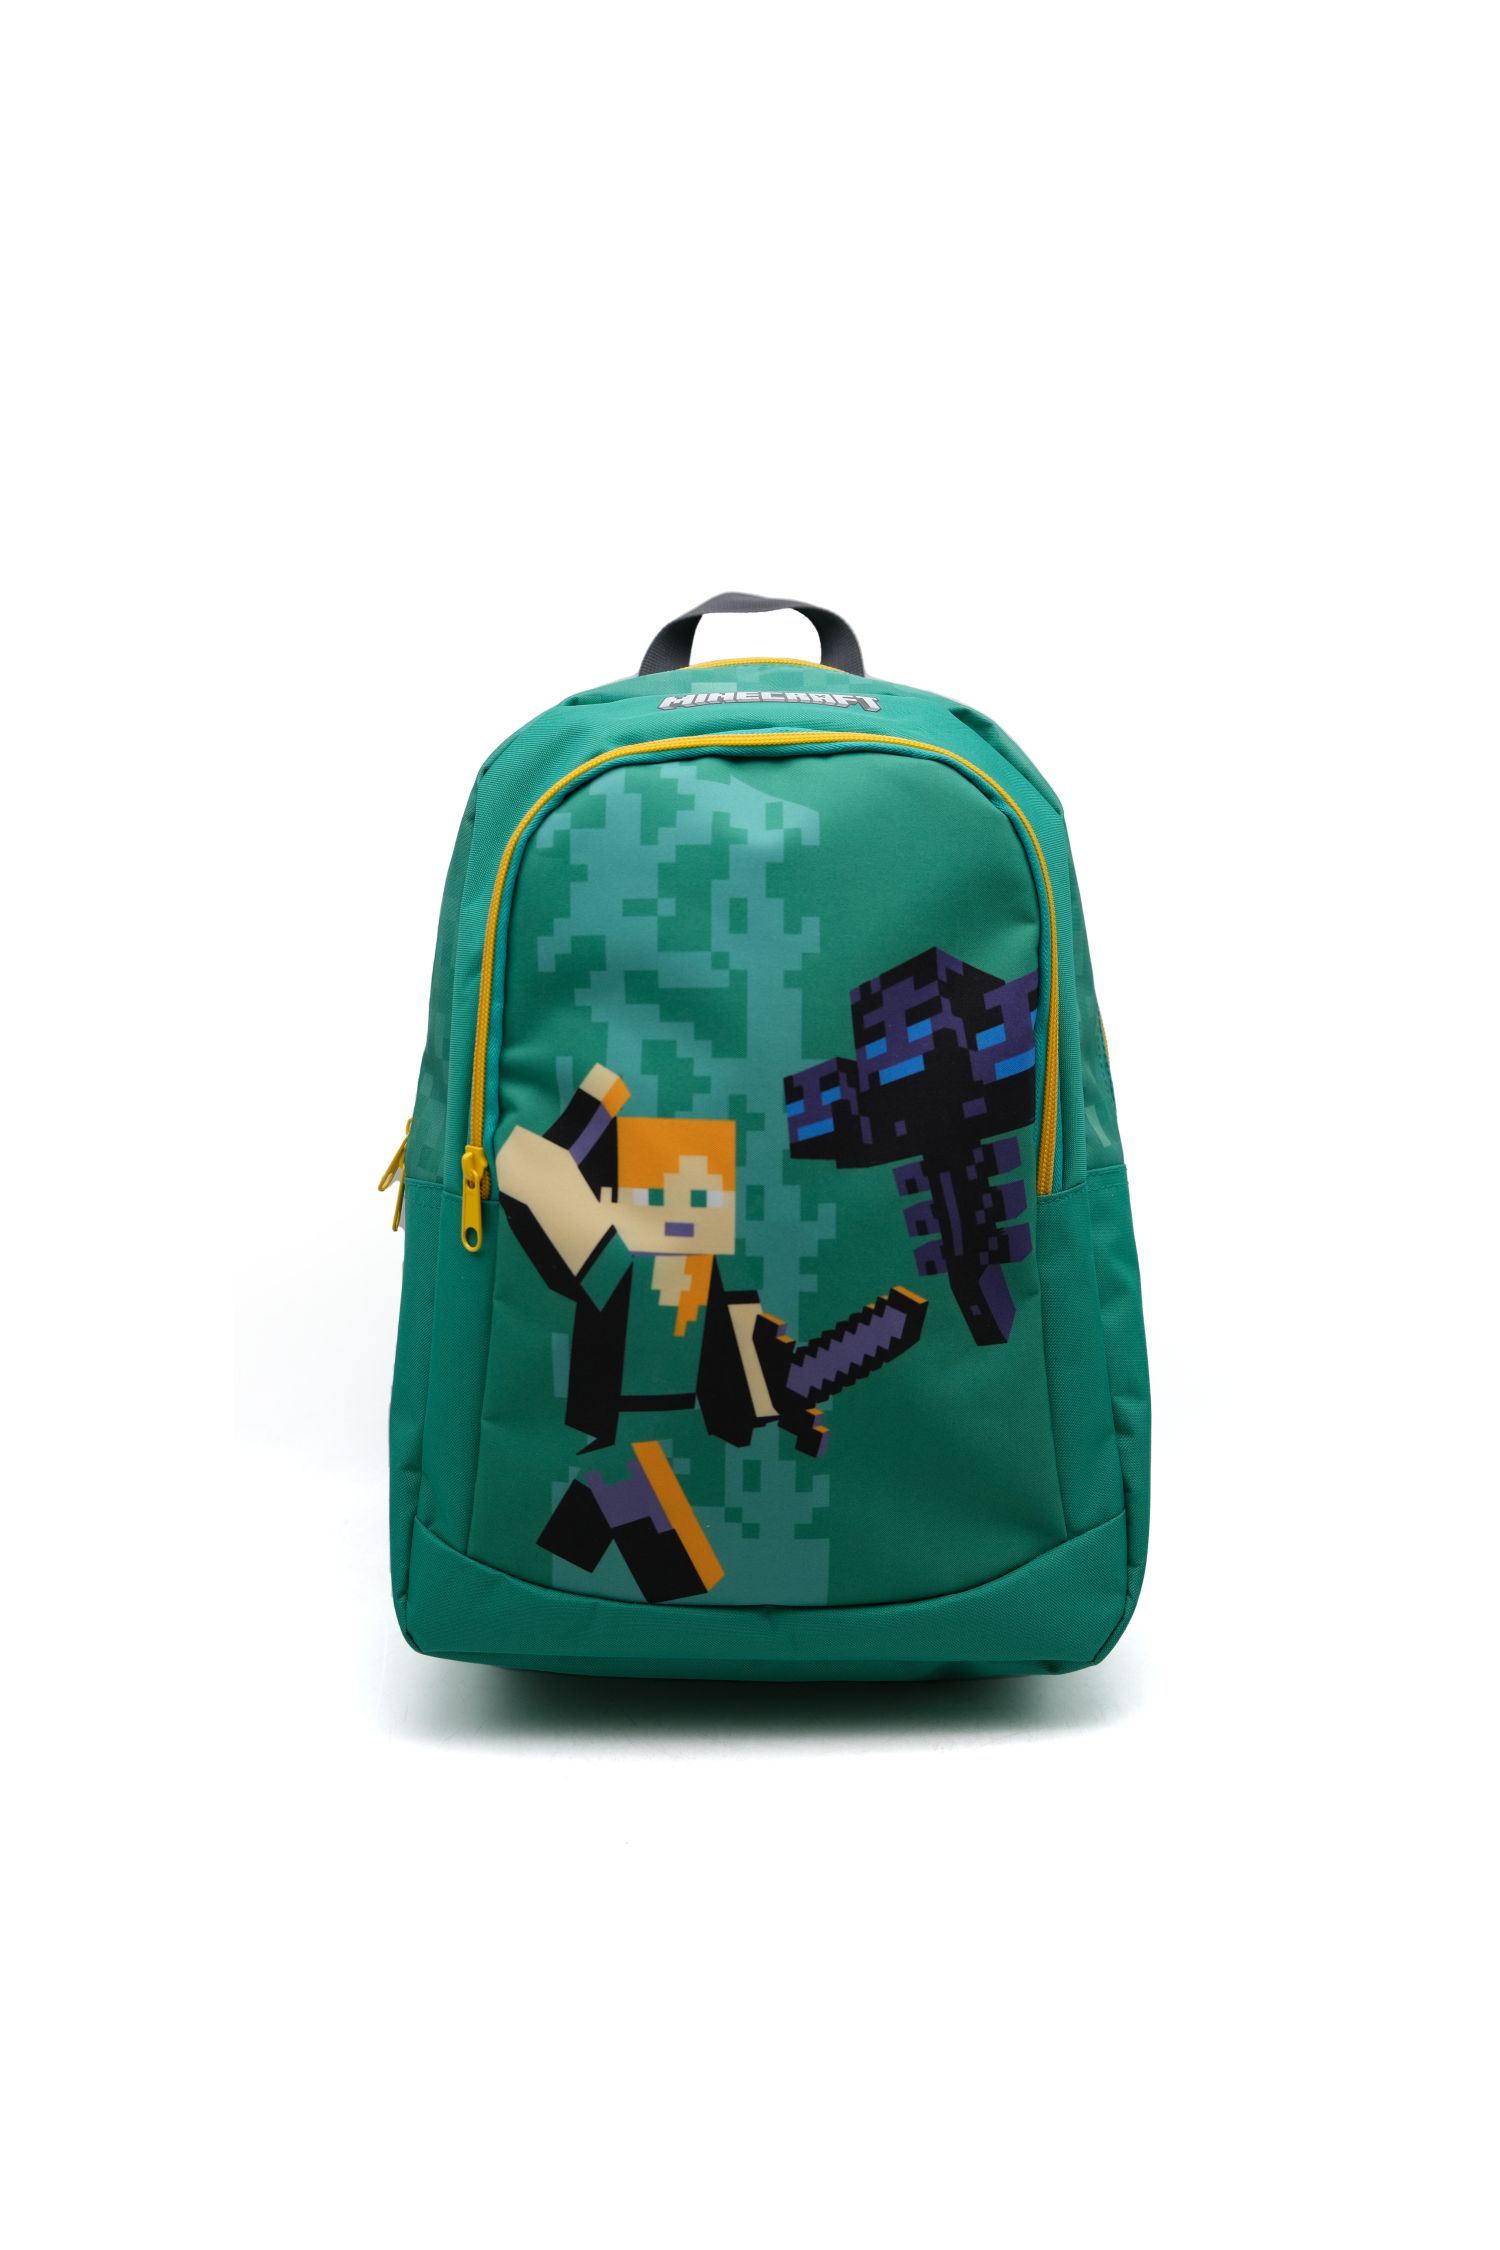 Рюкзак Minecraft Minecraft 38cm, зеленый школьный рюкзак minecraft розовый